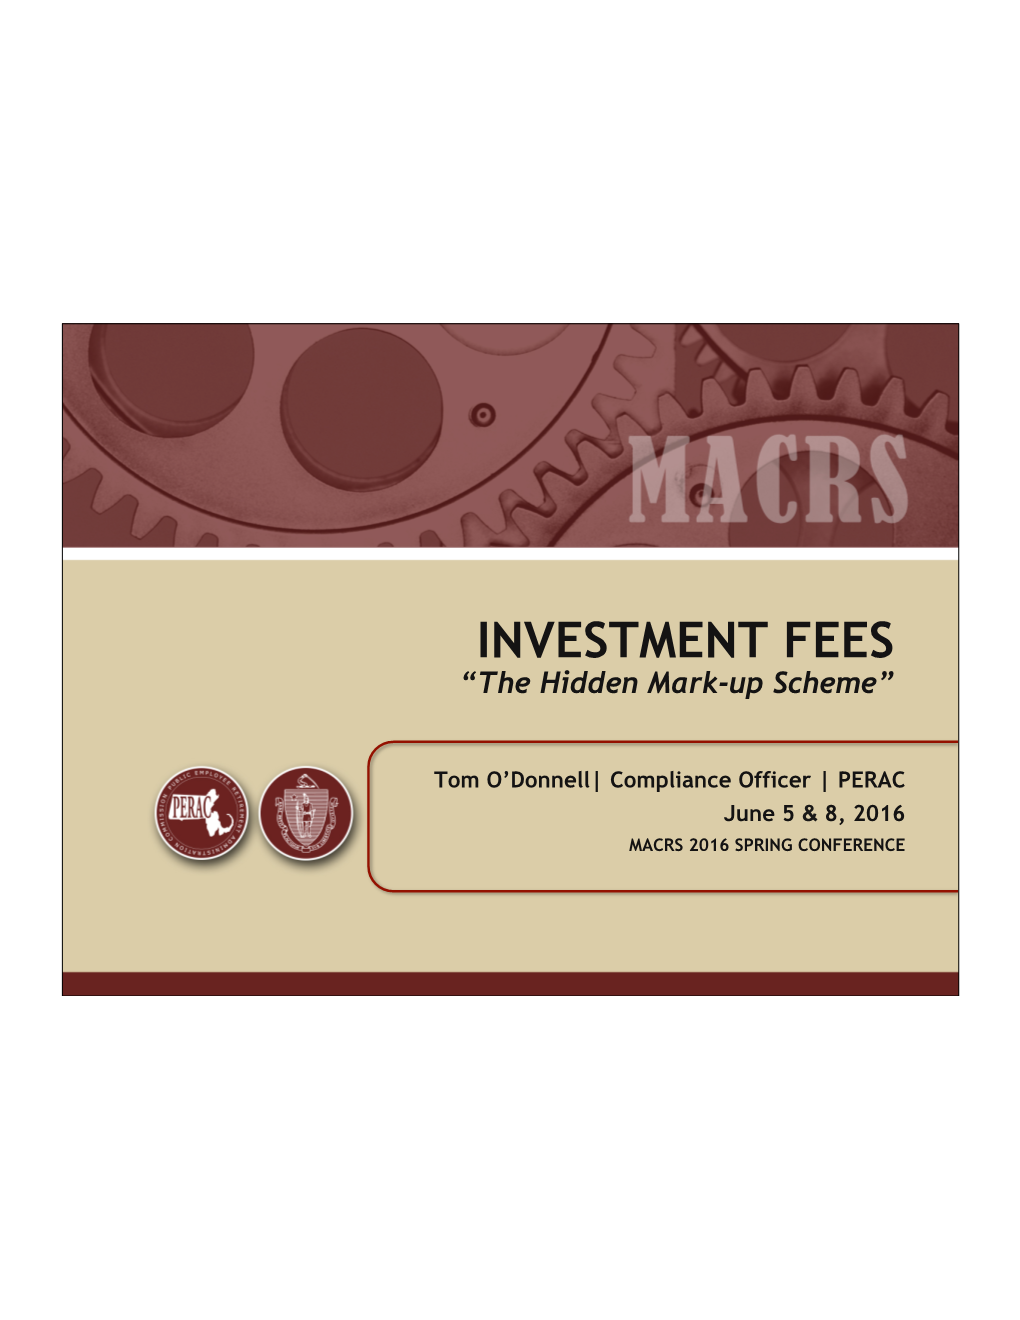 INVESTMENT FEES “The Hidden Mark-Up Scheme”